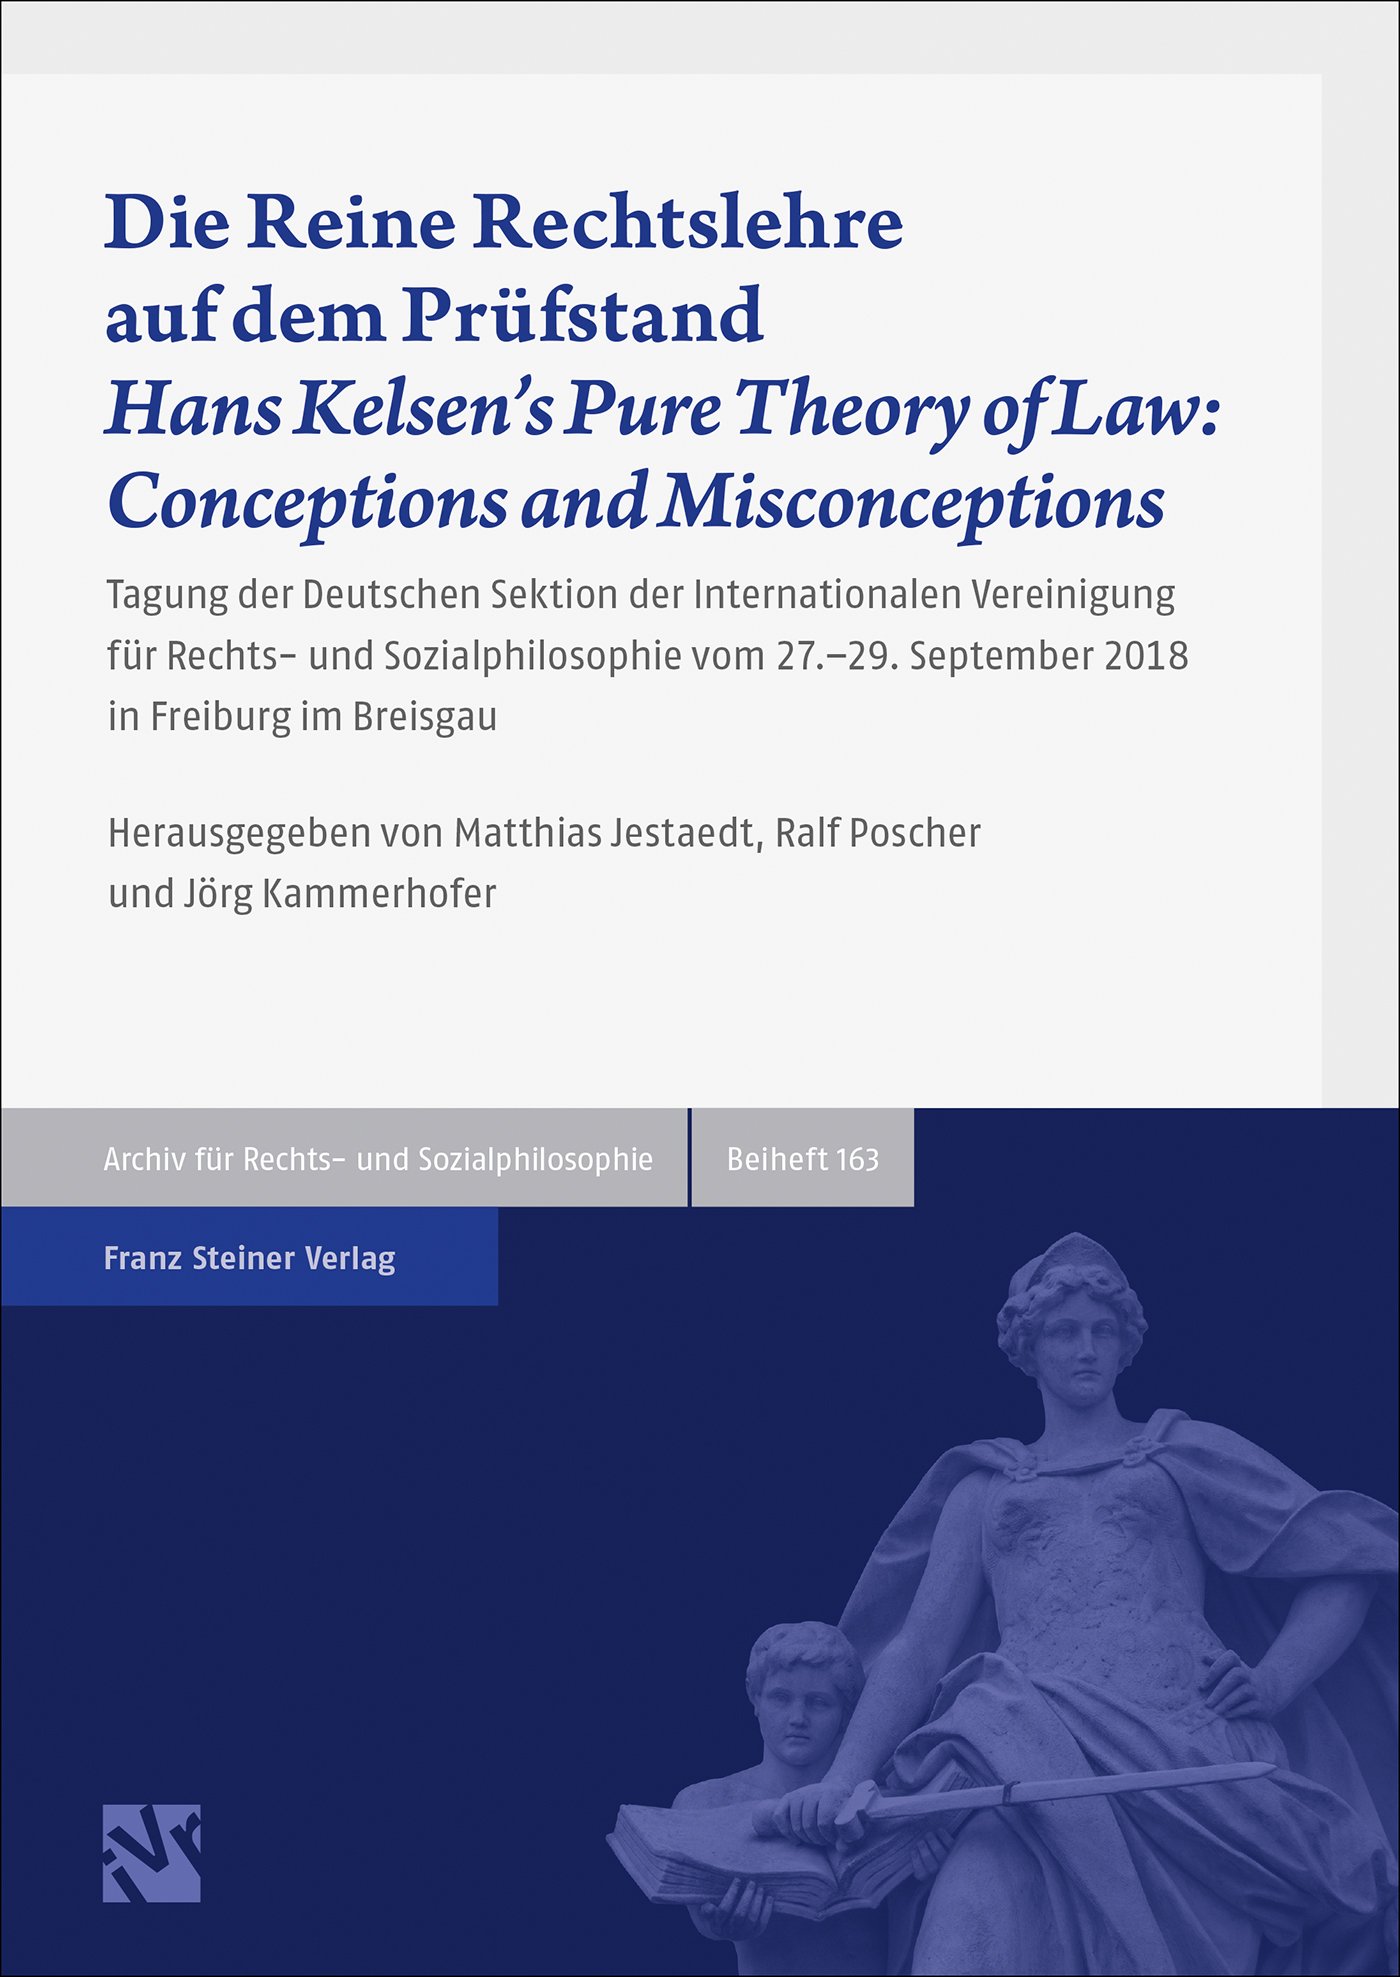 Die Reine Rechtslehre auf dem Prüfstand / Hans Kelsen's Pure Theory of Law: Conceptions and Misconceptions